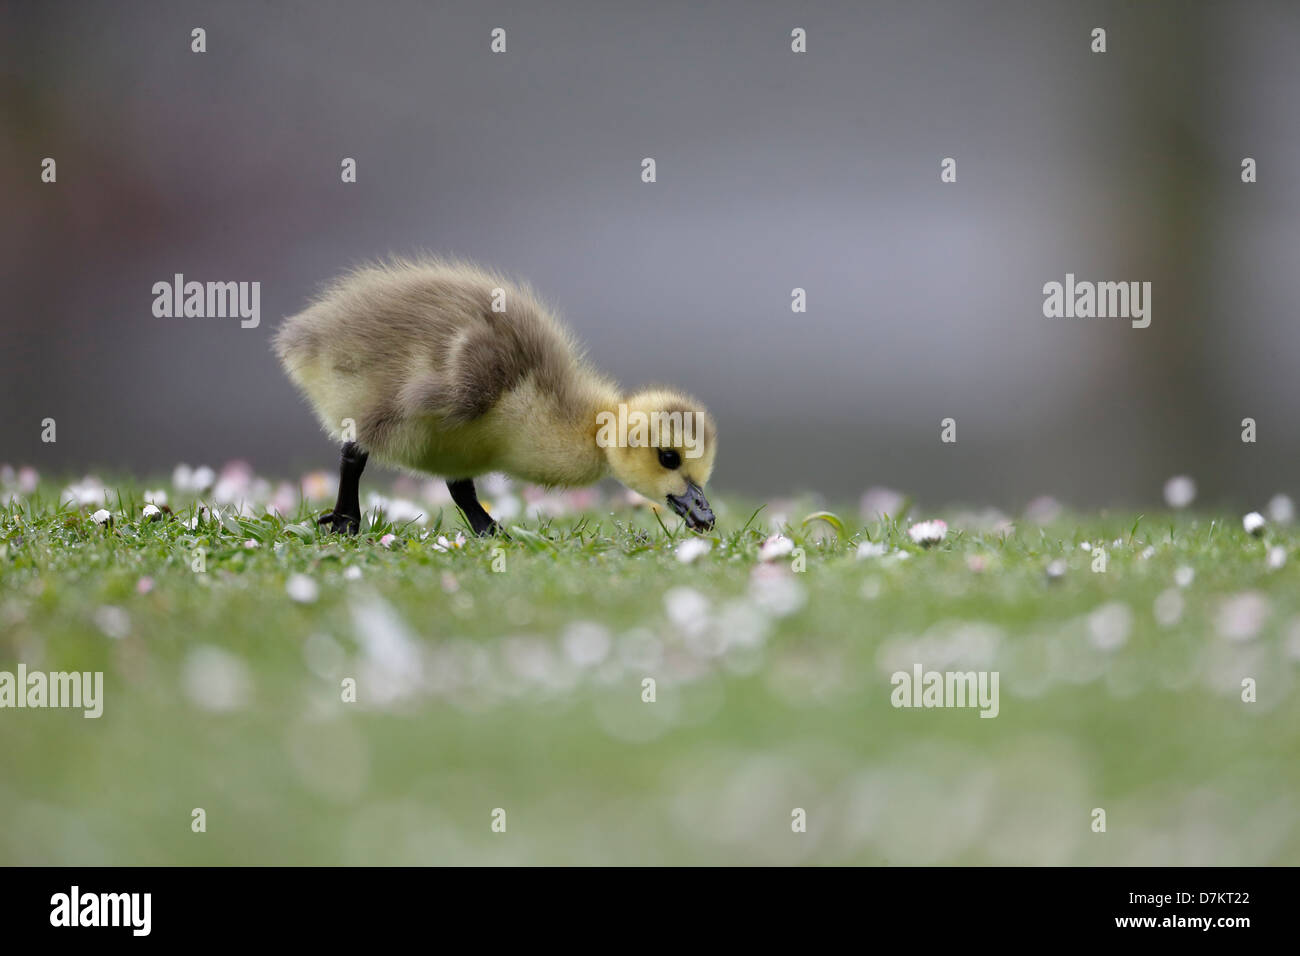 Canada goose, Branta canadensis, single gosling on grass, London, May 2013 Stock Photo